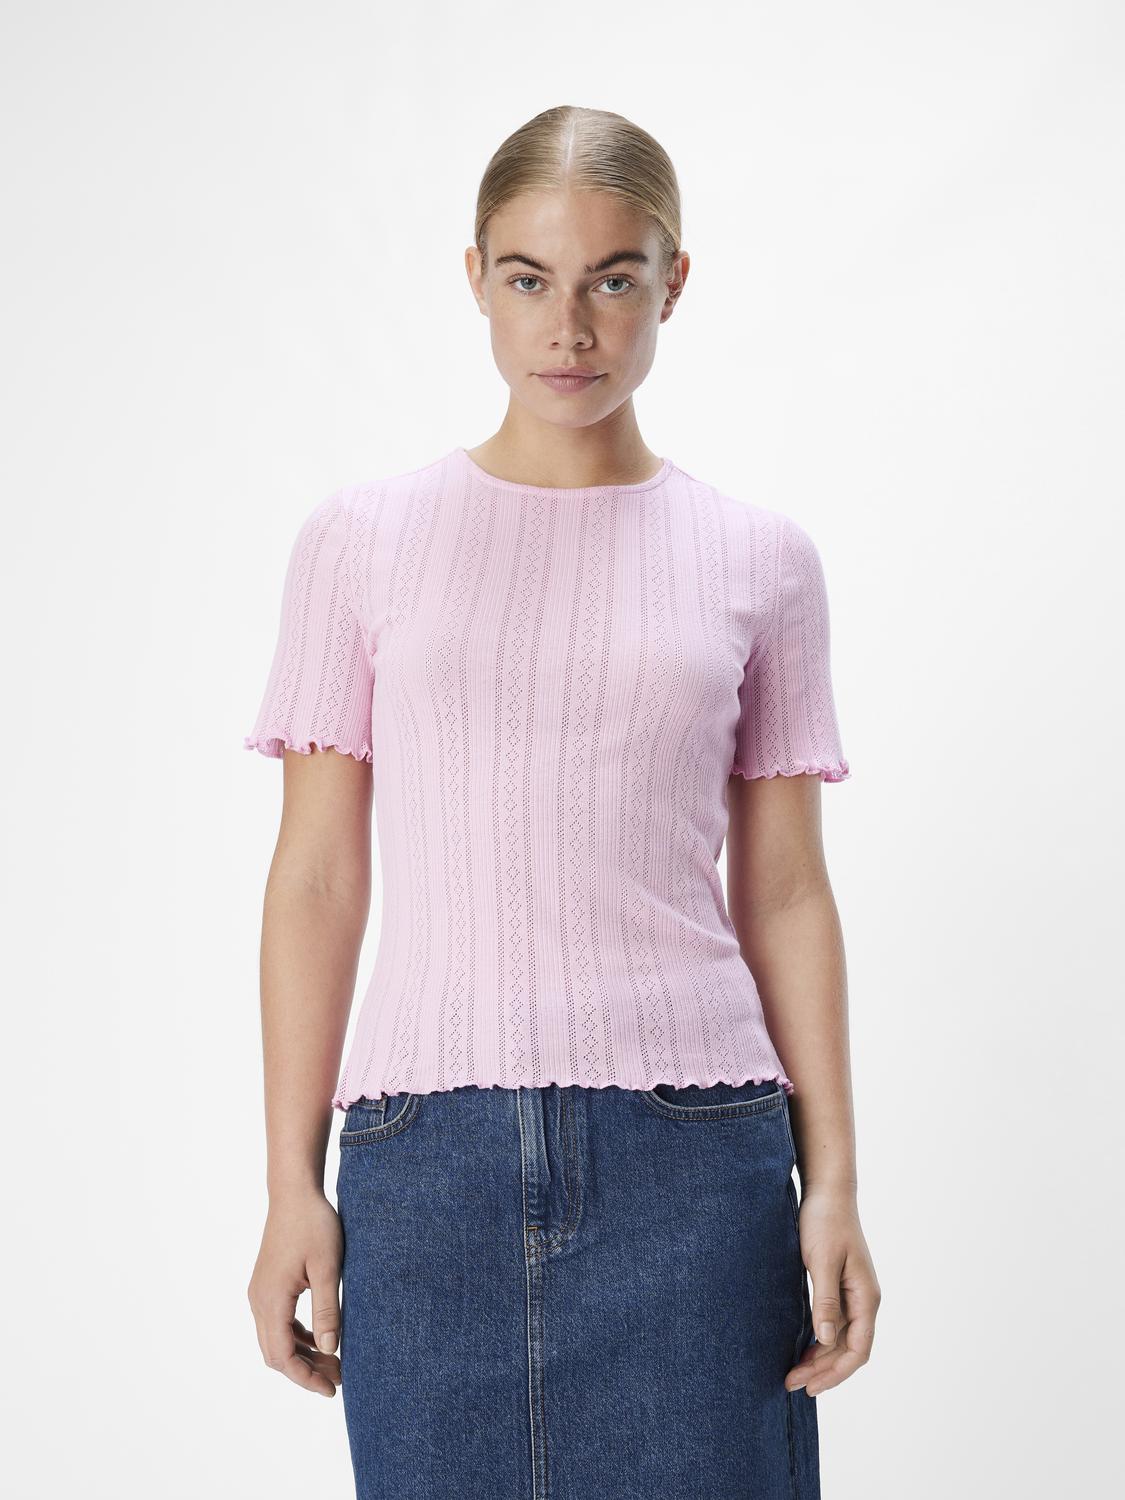 OBJAMALIE T-Shirt - Pink Frosting